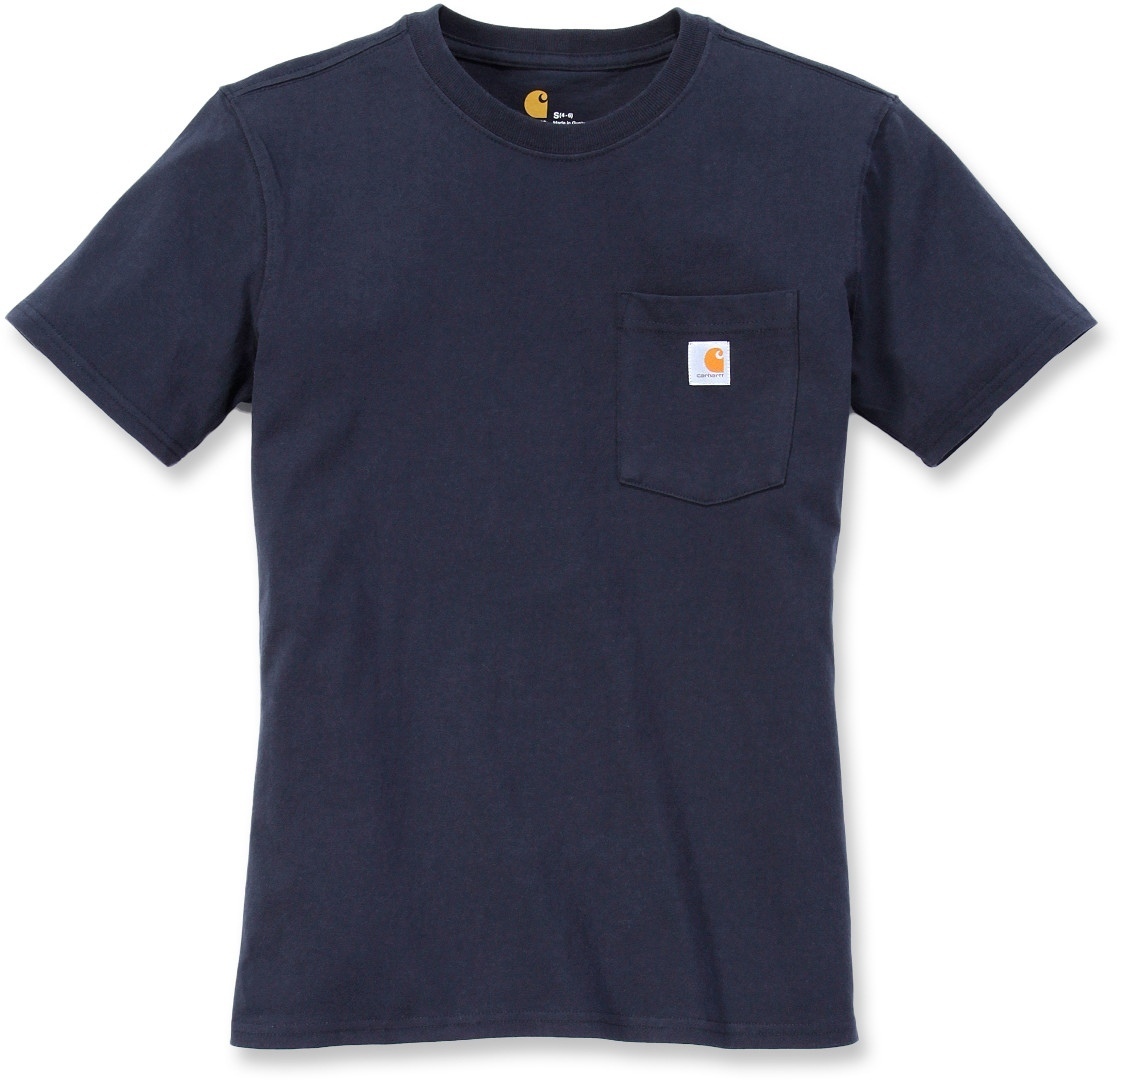 Футболка женская Carhartt Workwear Pocket, темно-синий футболка женская carhartt workwear pocket синий